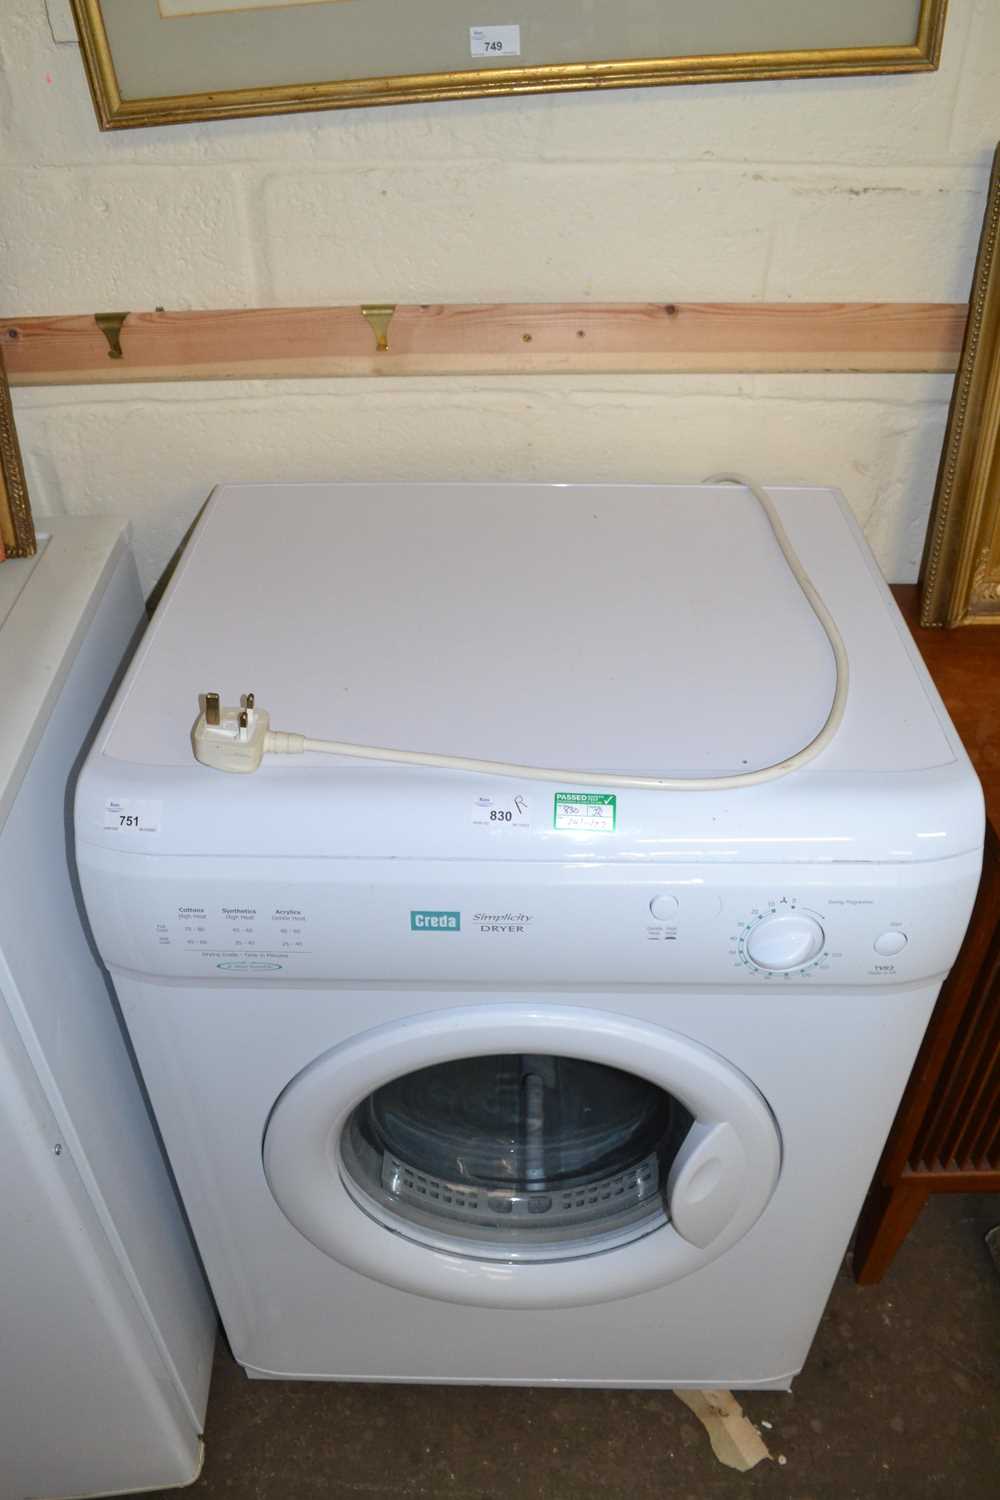 Lot 751 - Creda Simplicity tumble dryer